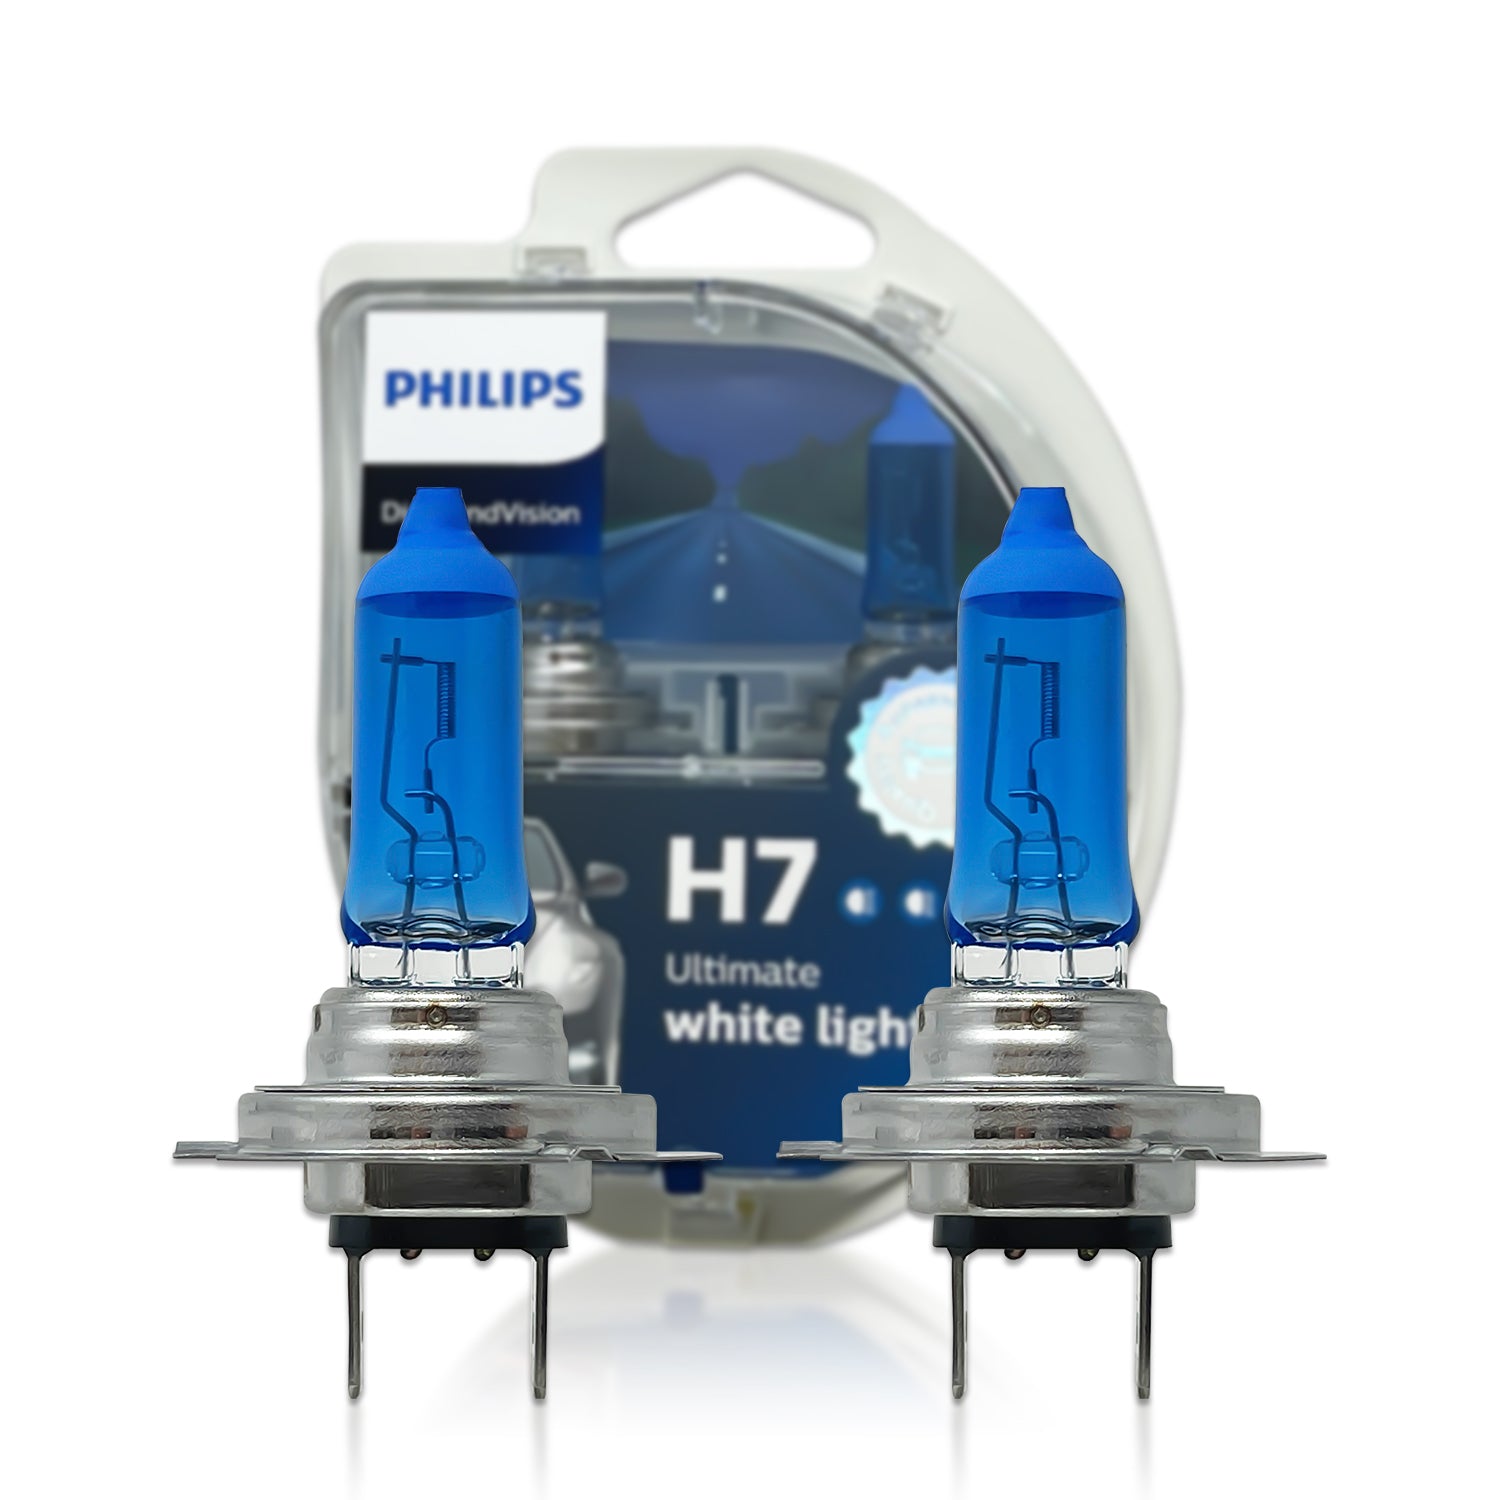 Philips Pack of 2 H7 Halogen Headlight Bulbs Diamond Vision 5000K